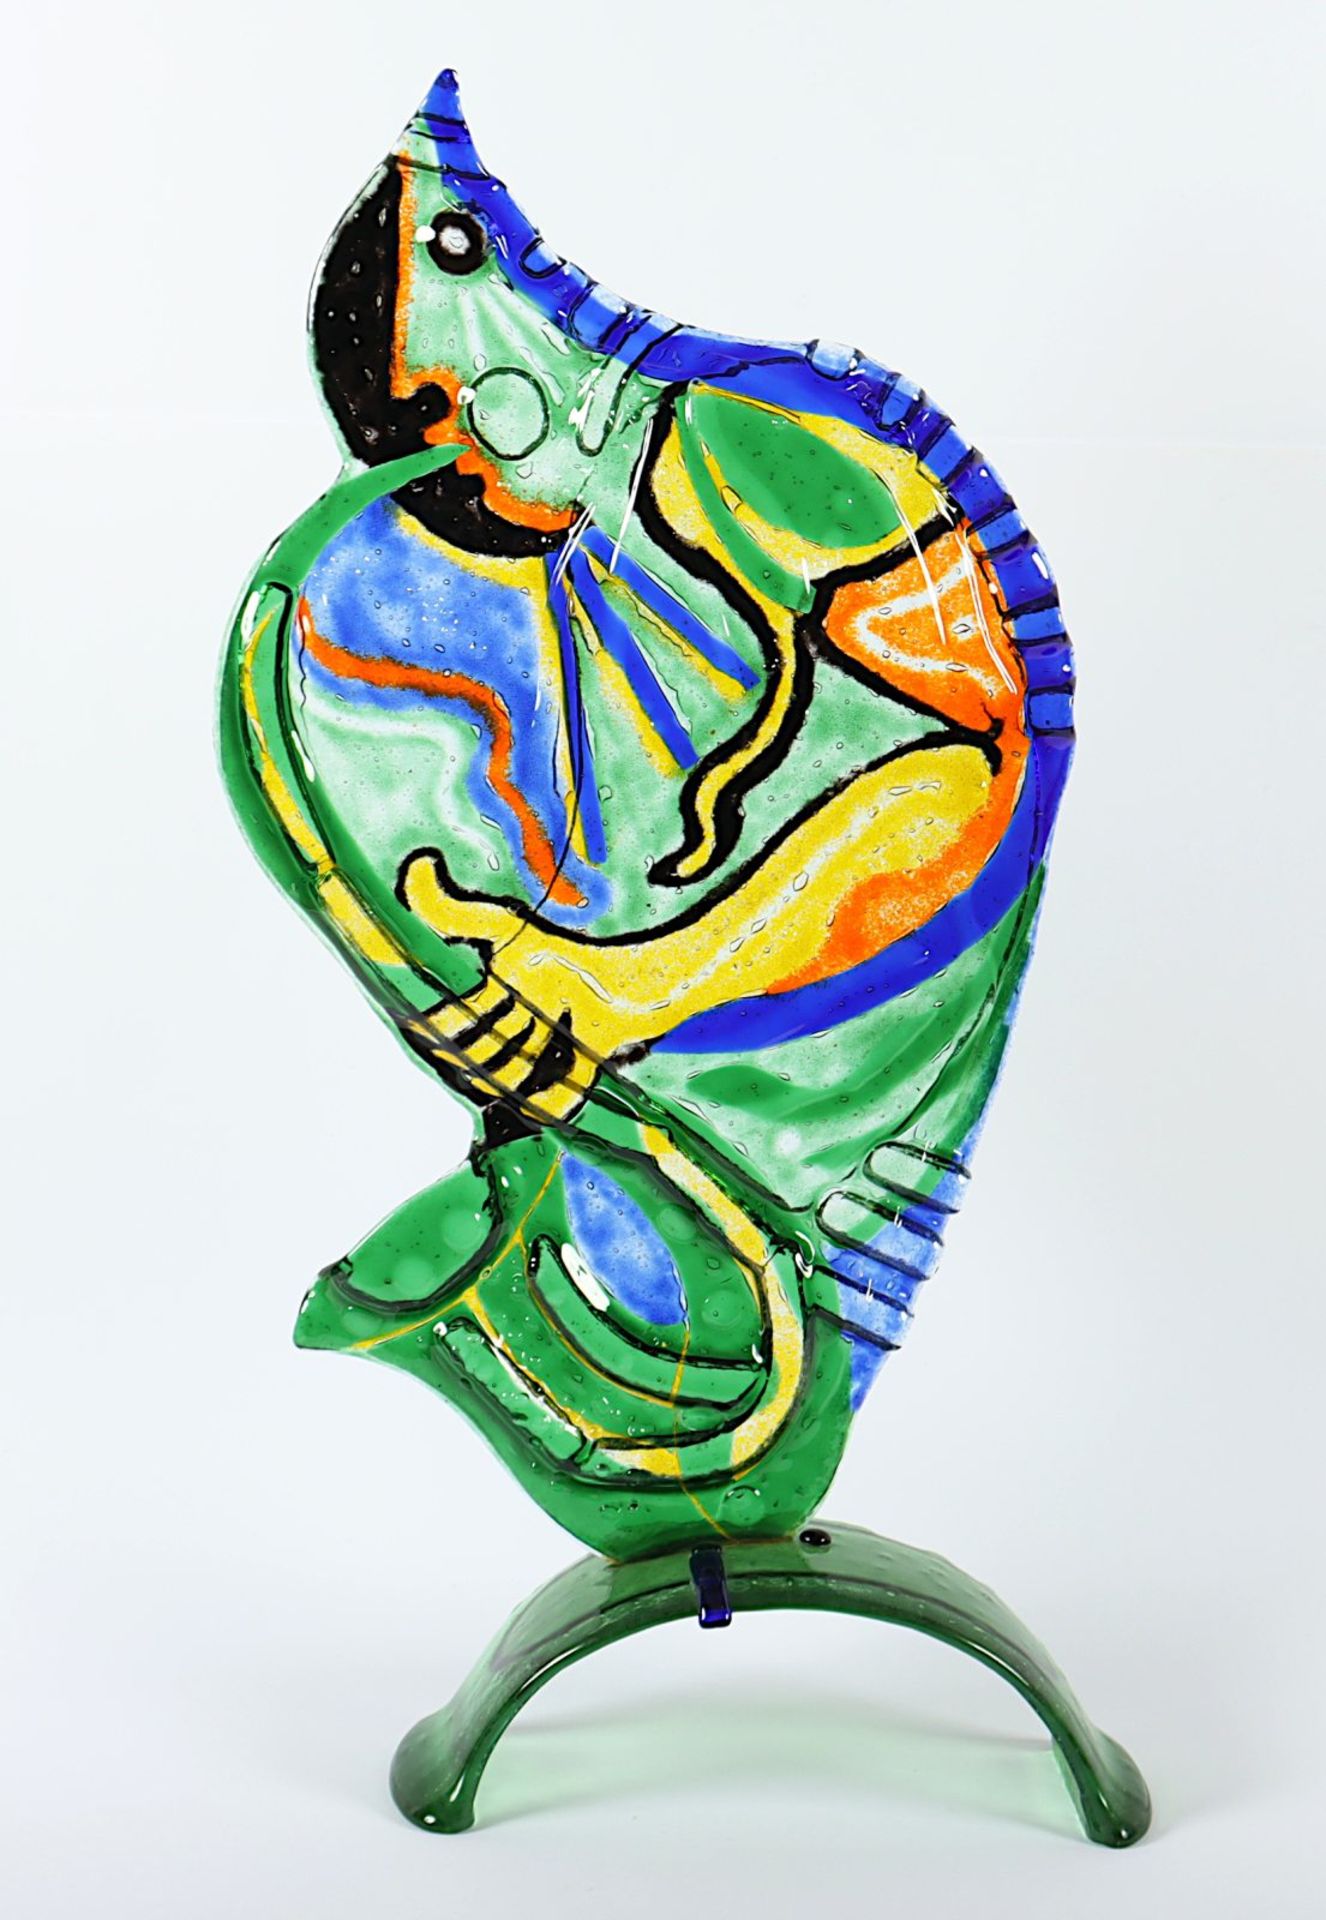 Vigliaturo, Silvio, "Saxofono", Glasskulptur